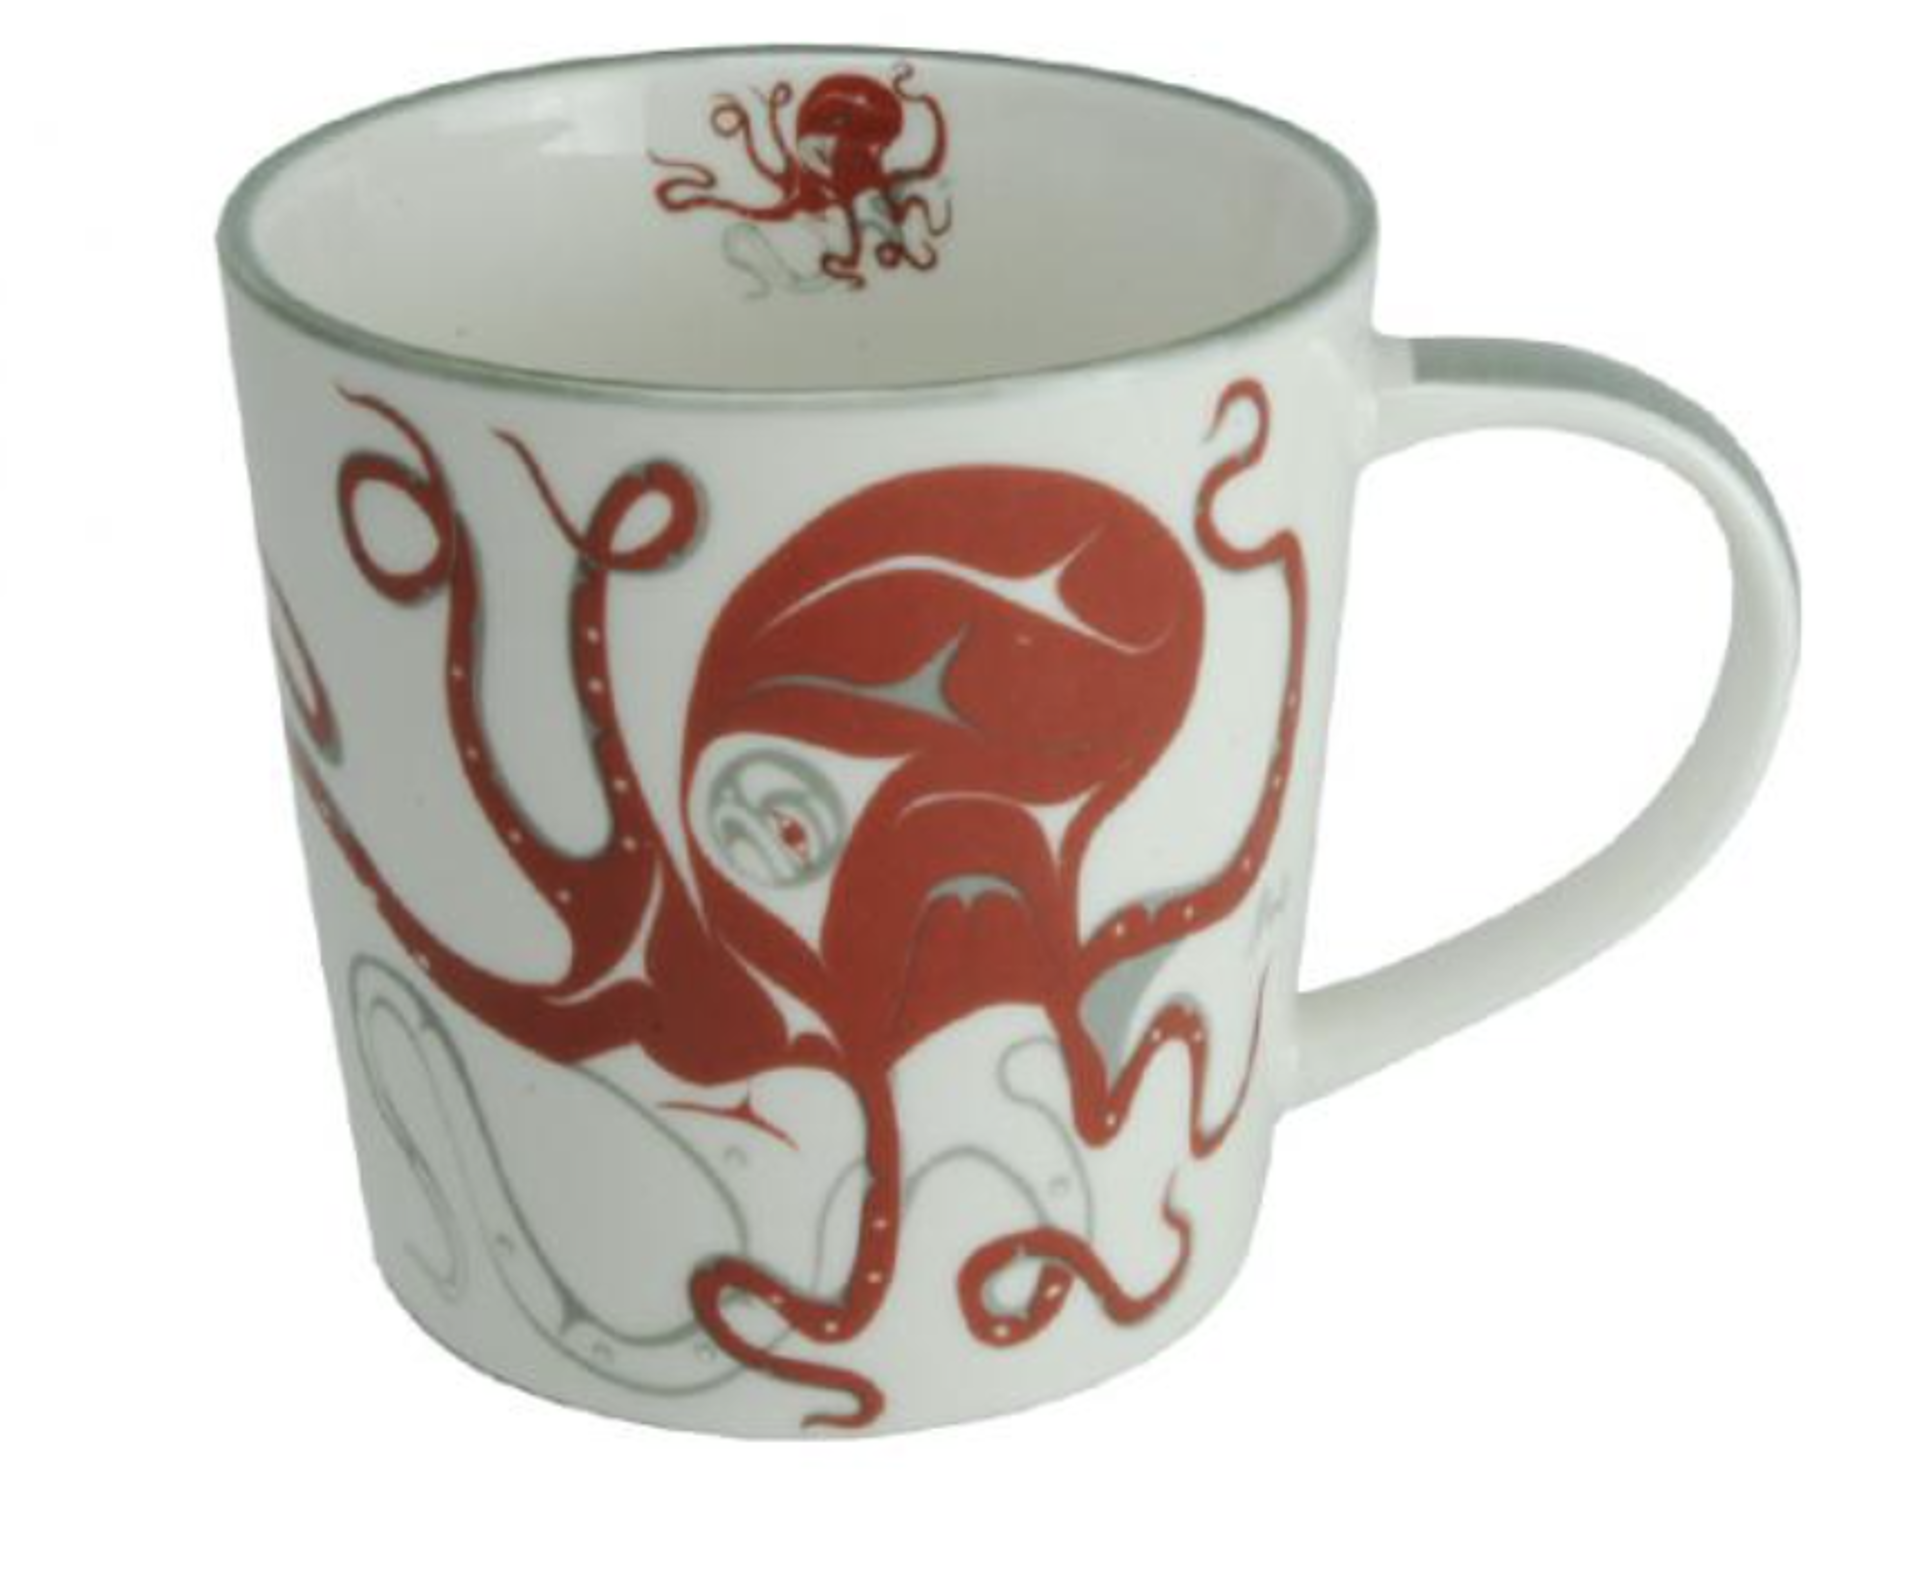 Octopus Ceramic Boxed Mug by Andrew Williams